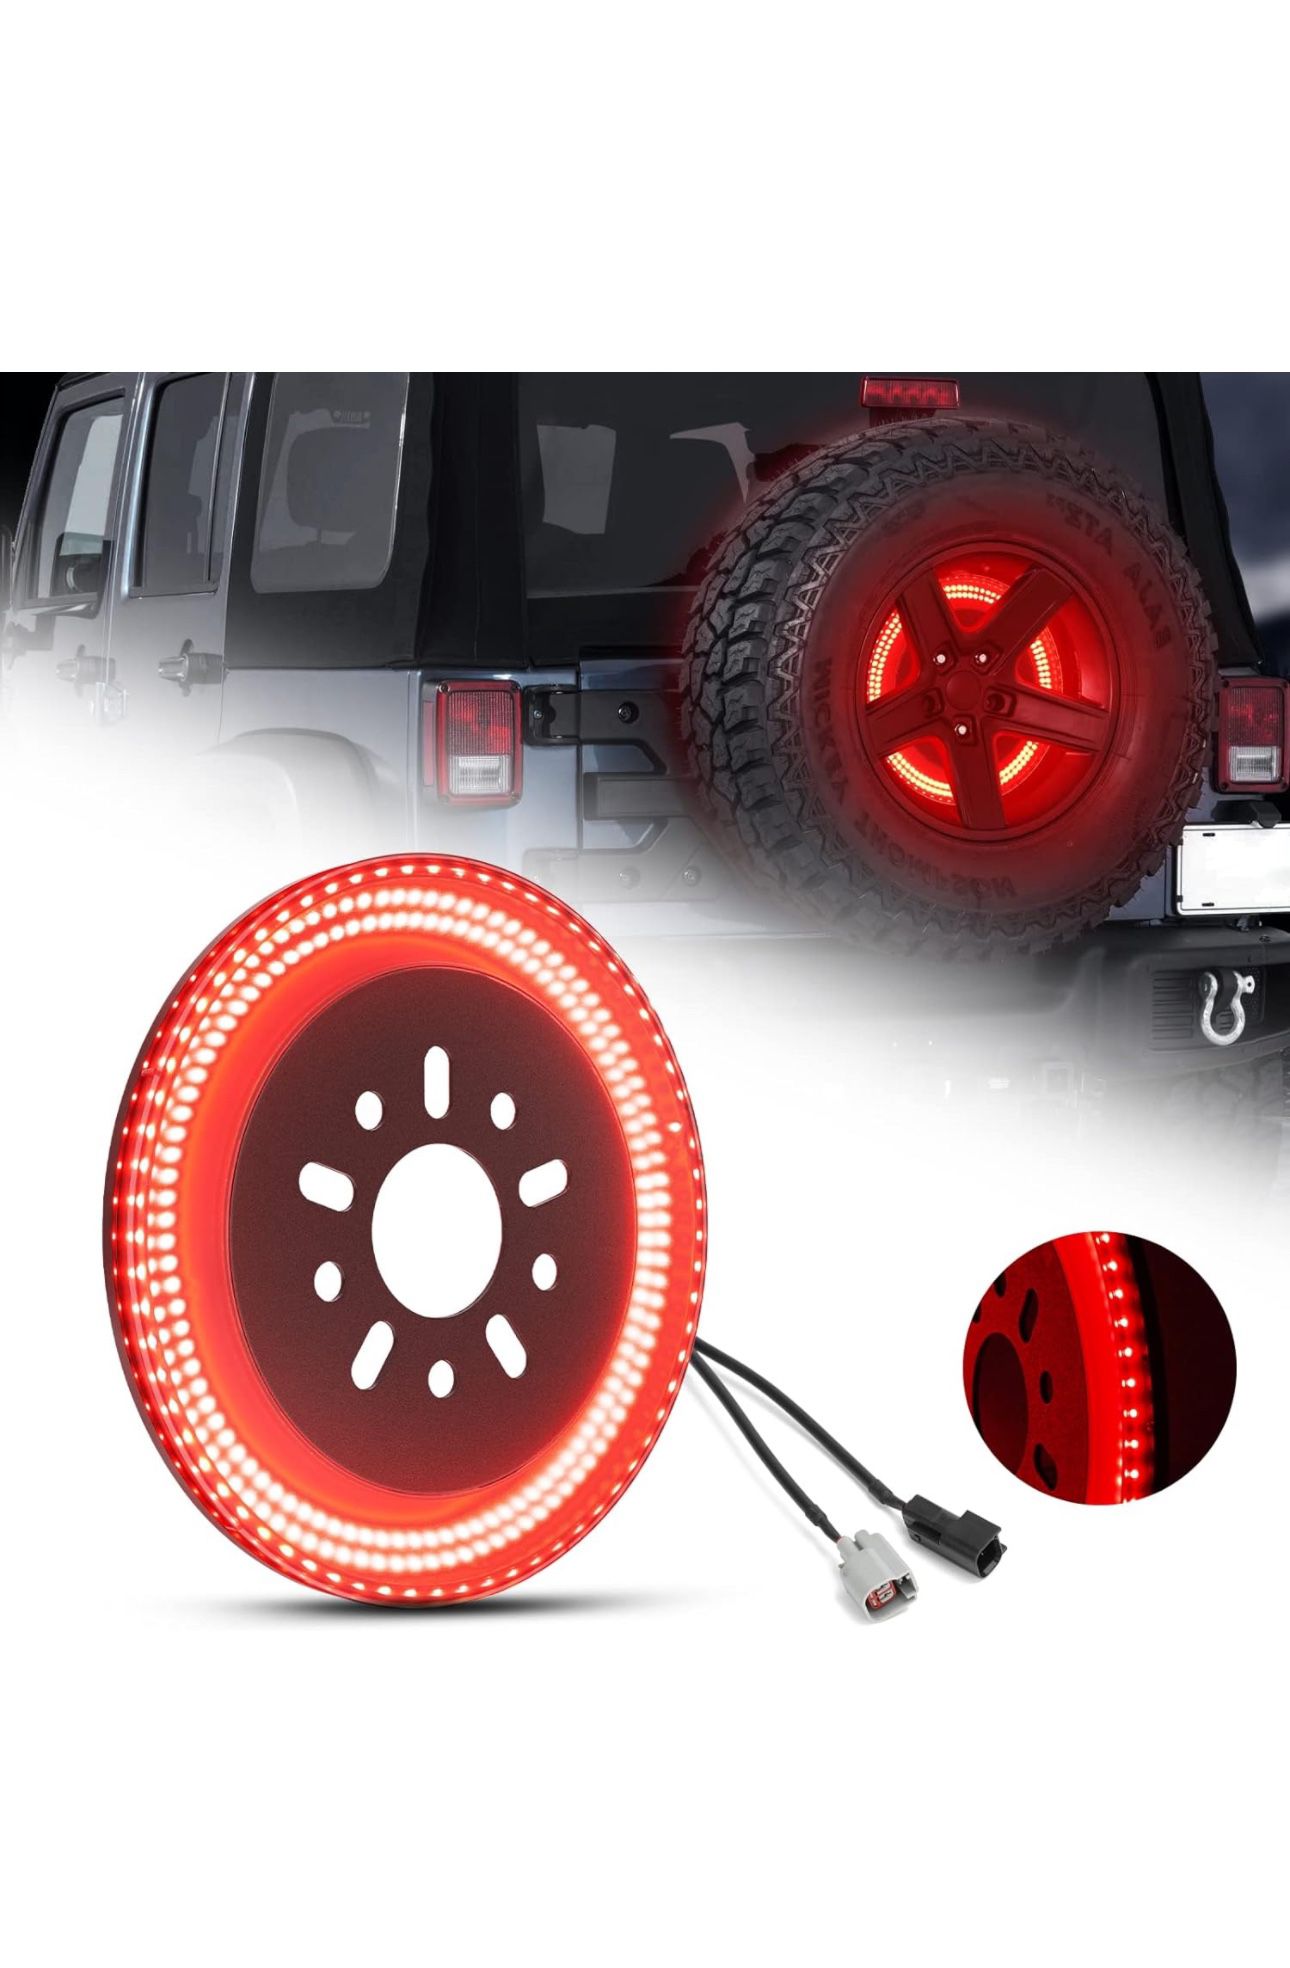 SUPAREE 3-Side Spare Tire Brake Light, 400PCs LED Wheel Light, Plug-N-Play 3rd Third Brake Light Compatible with Jeep Wrangler 2007-2018 JK JKU YJ TJ,